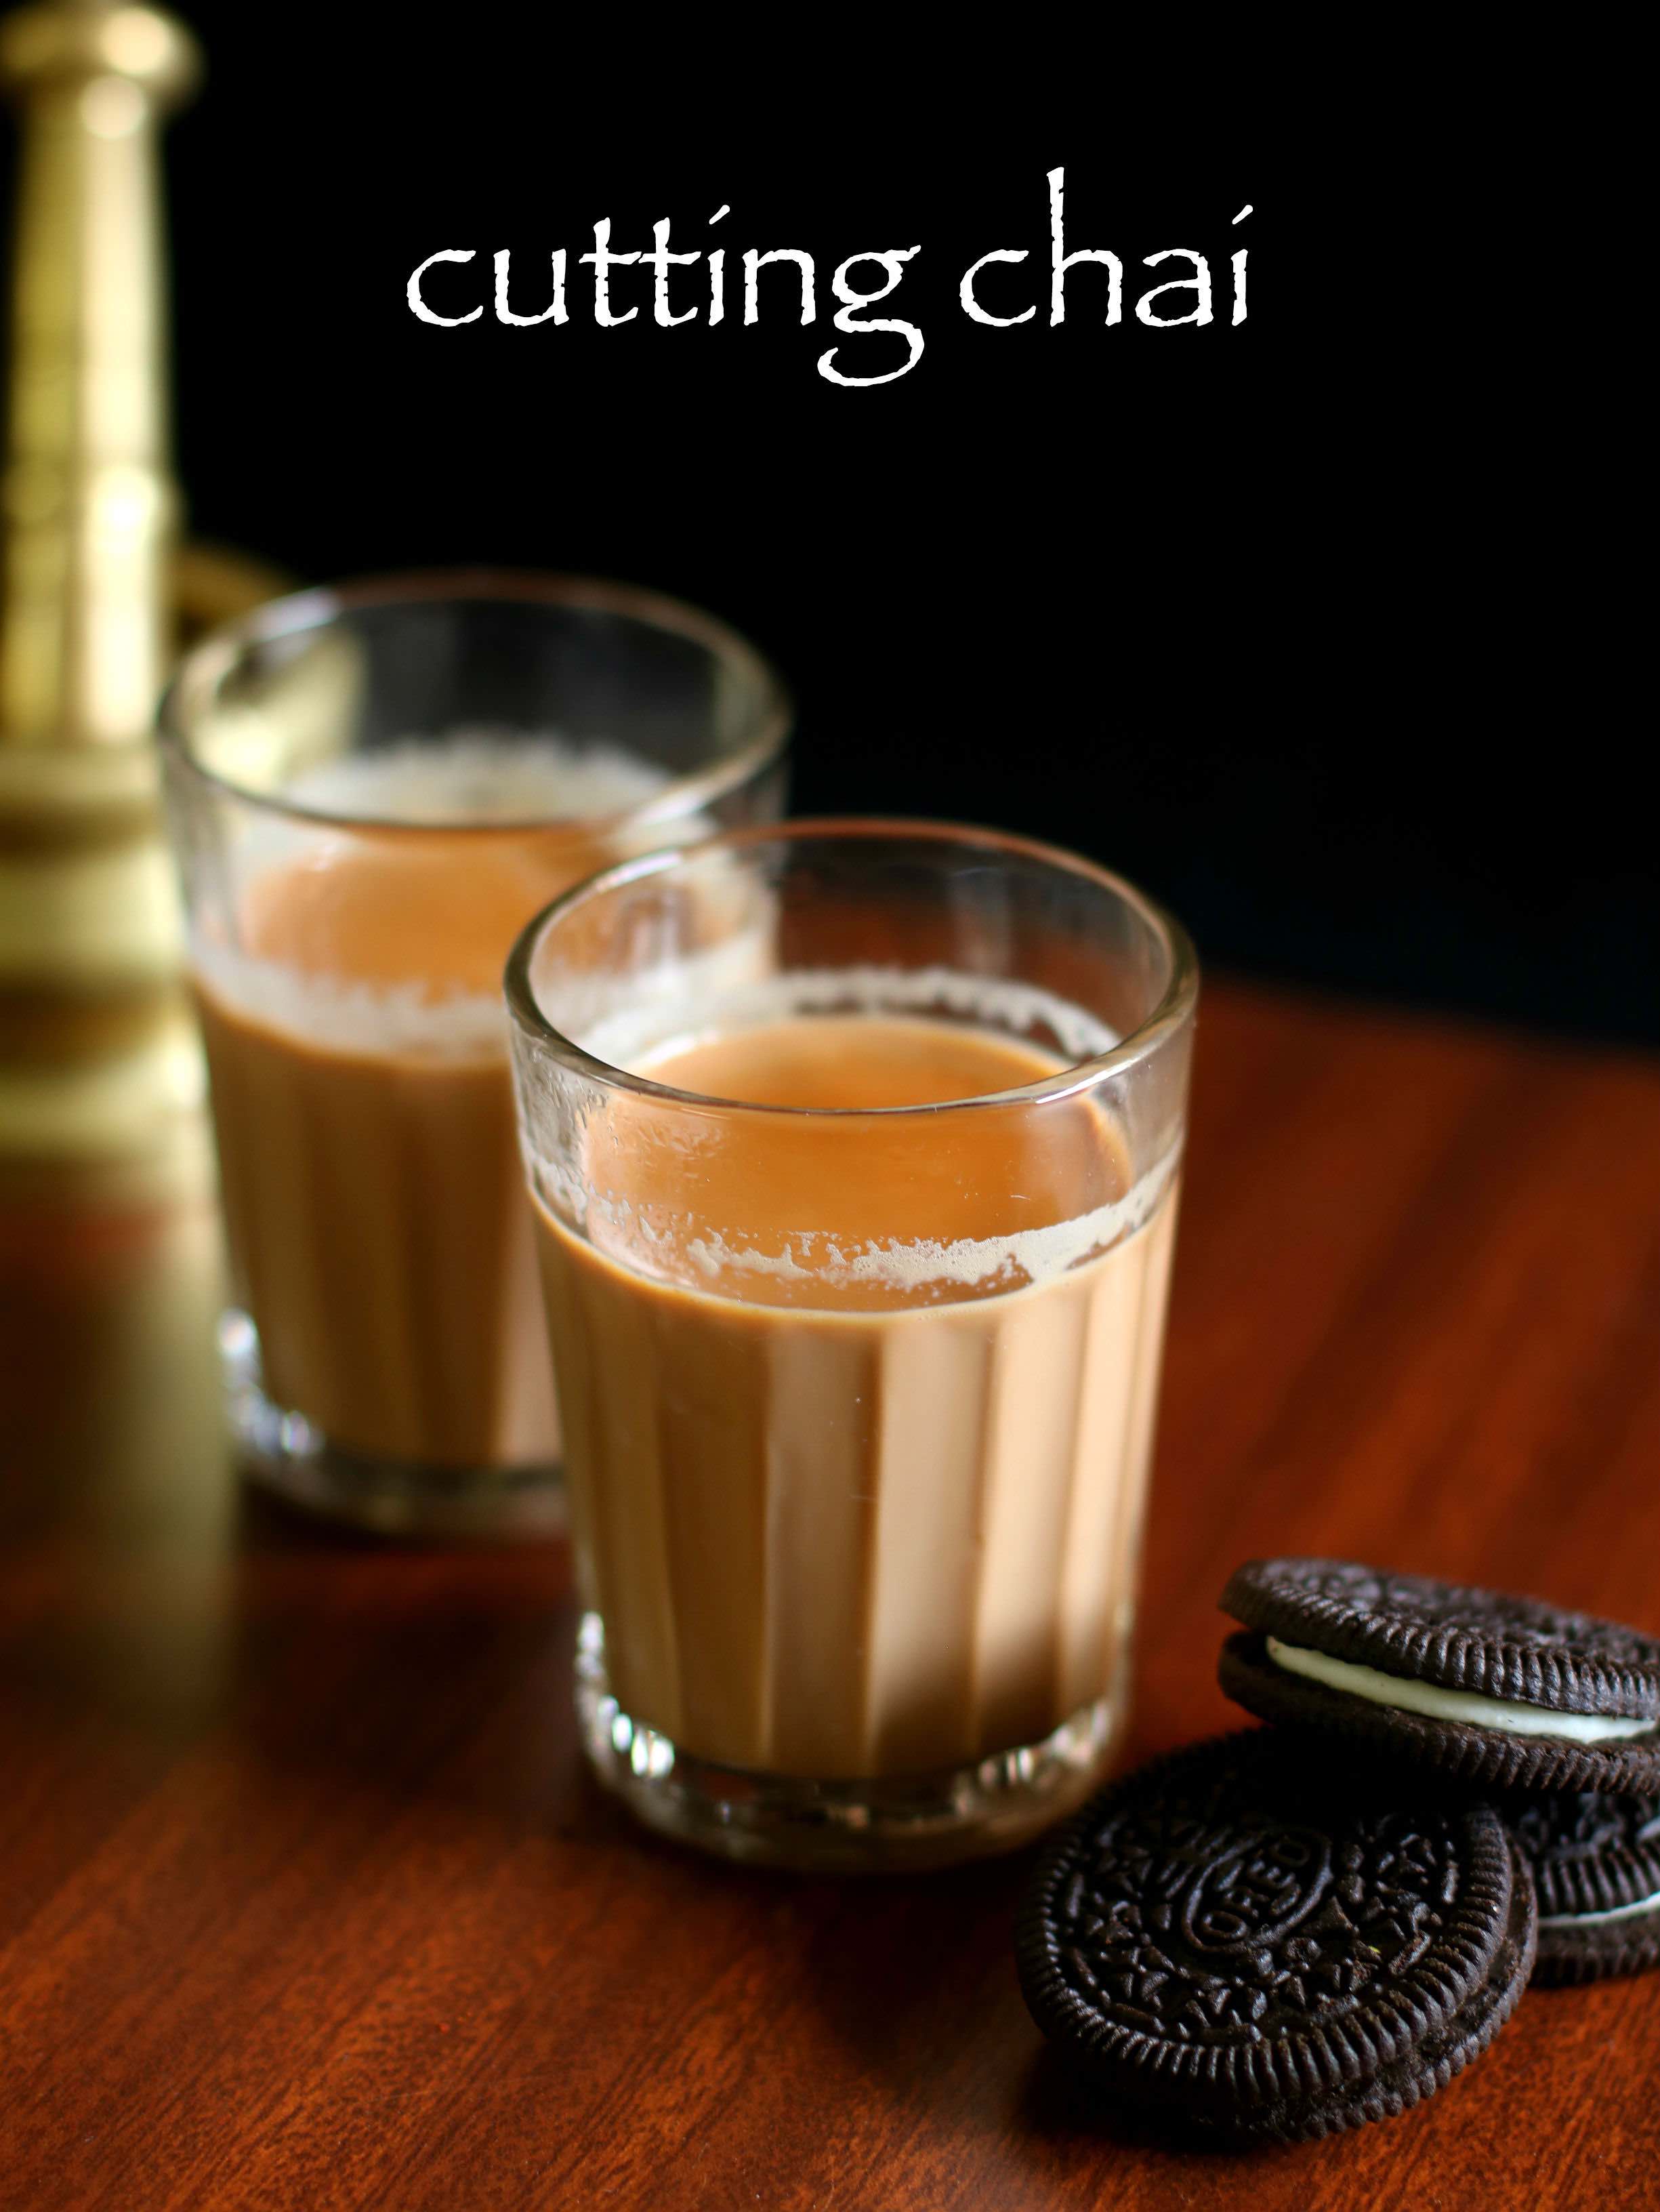 https://hebbarskitchen.com/wp-content/uploads/mainPhotos/cutting-chai-recipe-mumbai-cutting-tea-recipe-how-to-make-cutting-chai-1.jpeg